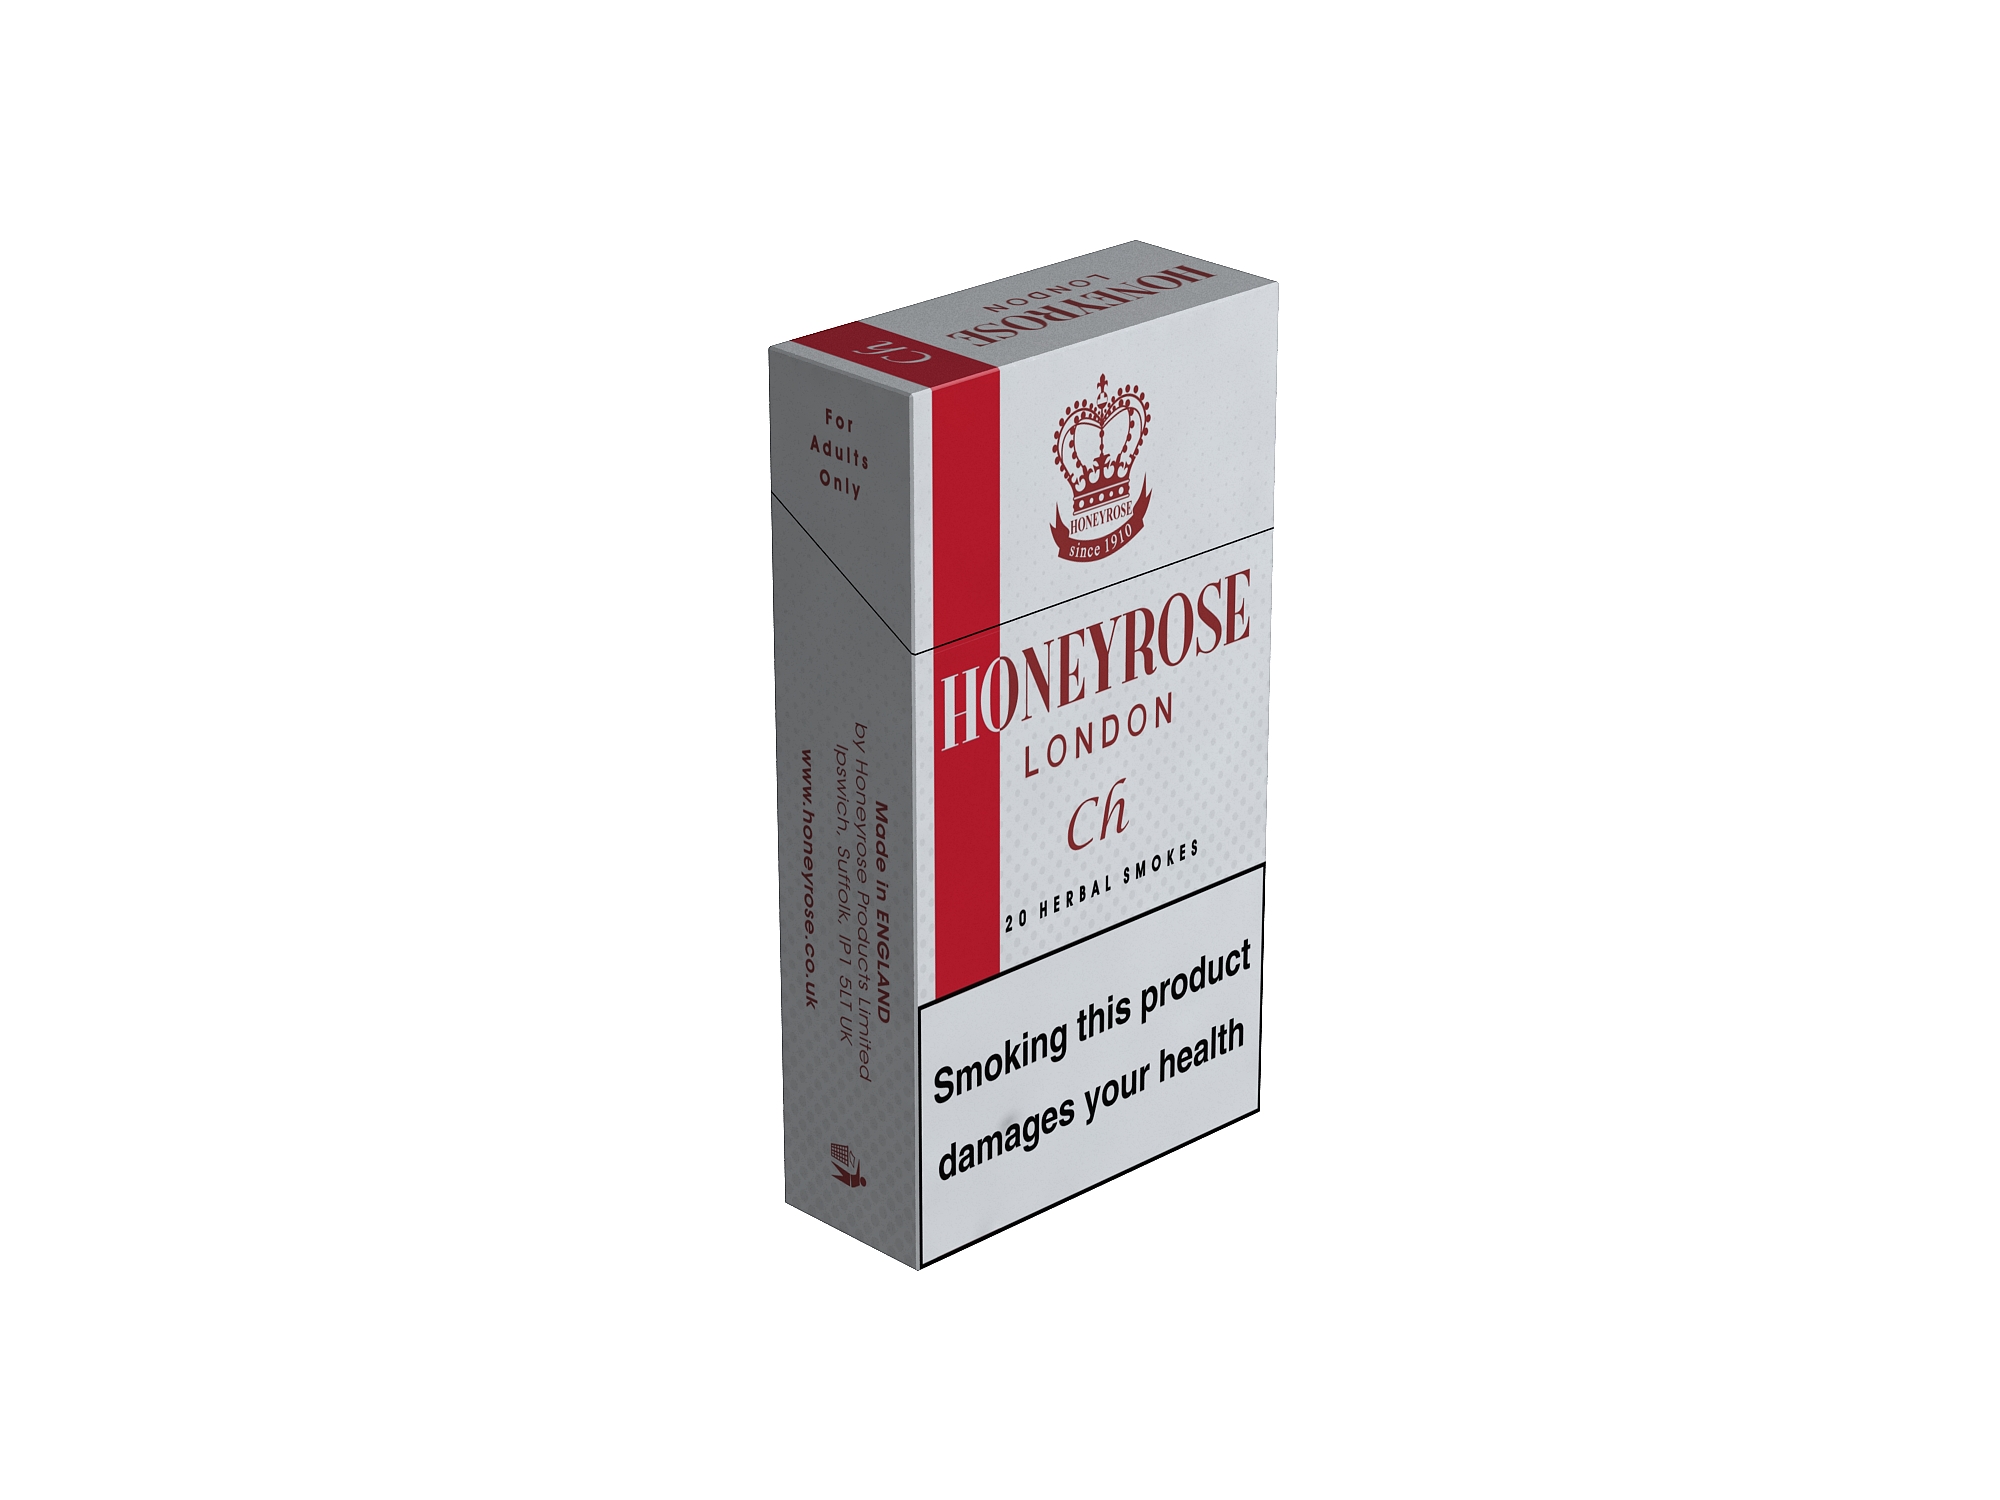 Honeyrose London CH Flip Top - 20 Packs of 20 Herbal cigarettes (400)